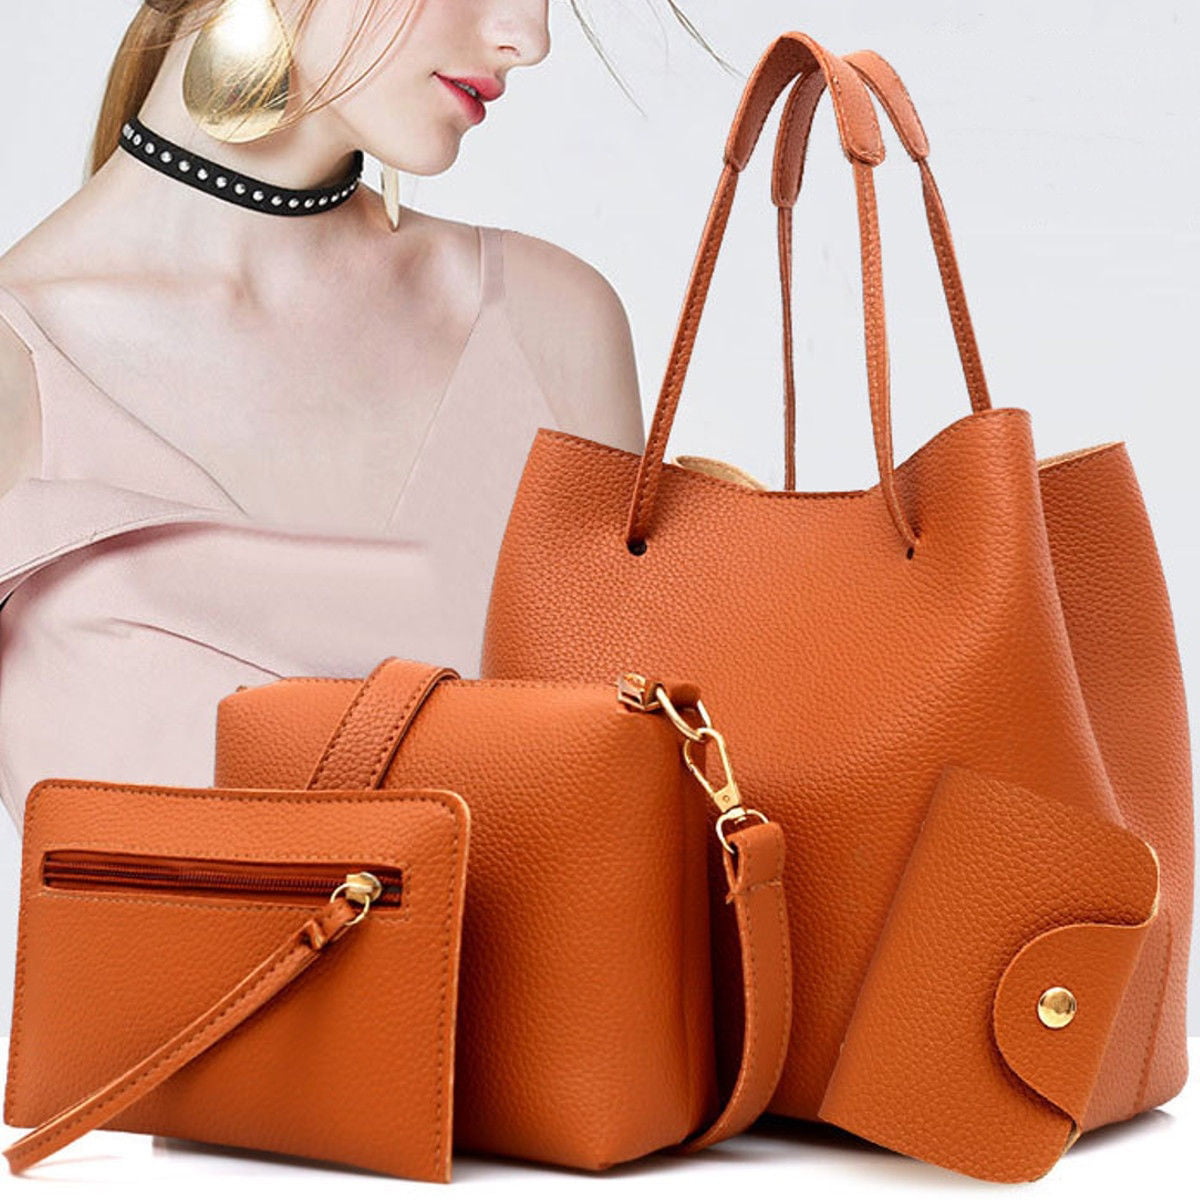 Checkered Handbags for Women Shoulder Bags Tote Satchel Hobo 4pcs Purse Set s for Women Purses Fashion Tote Bags 4pcs 